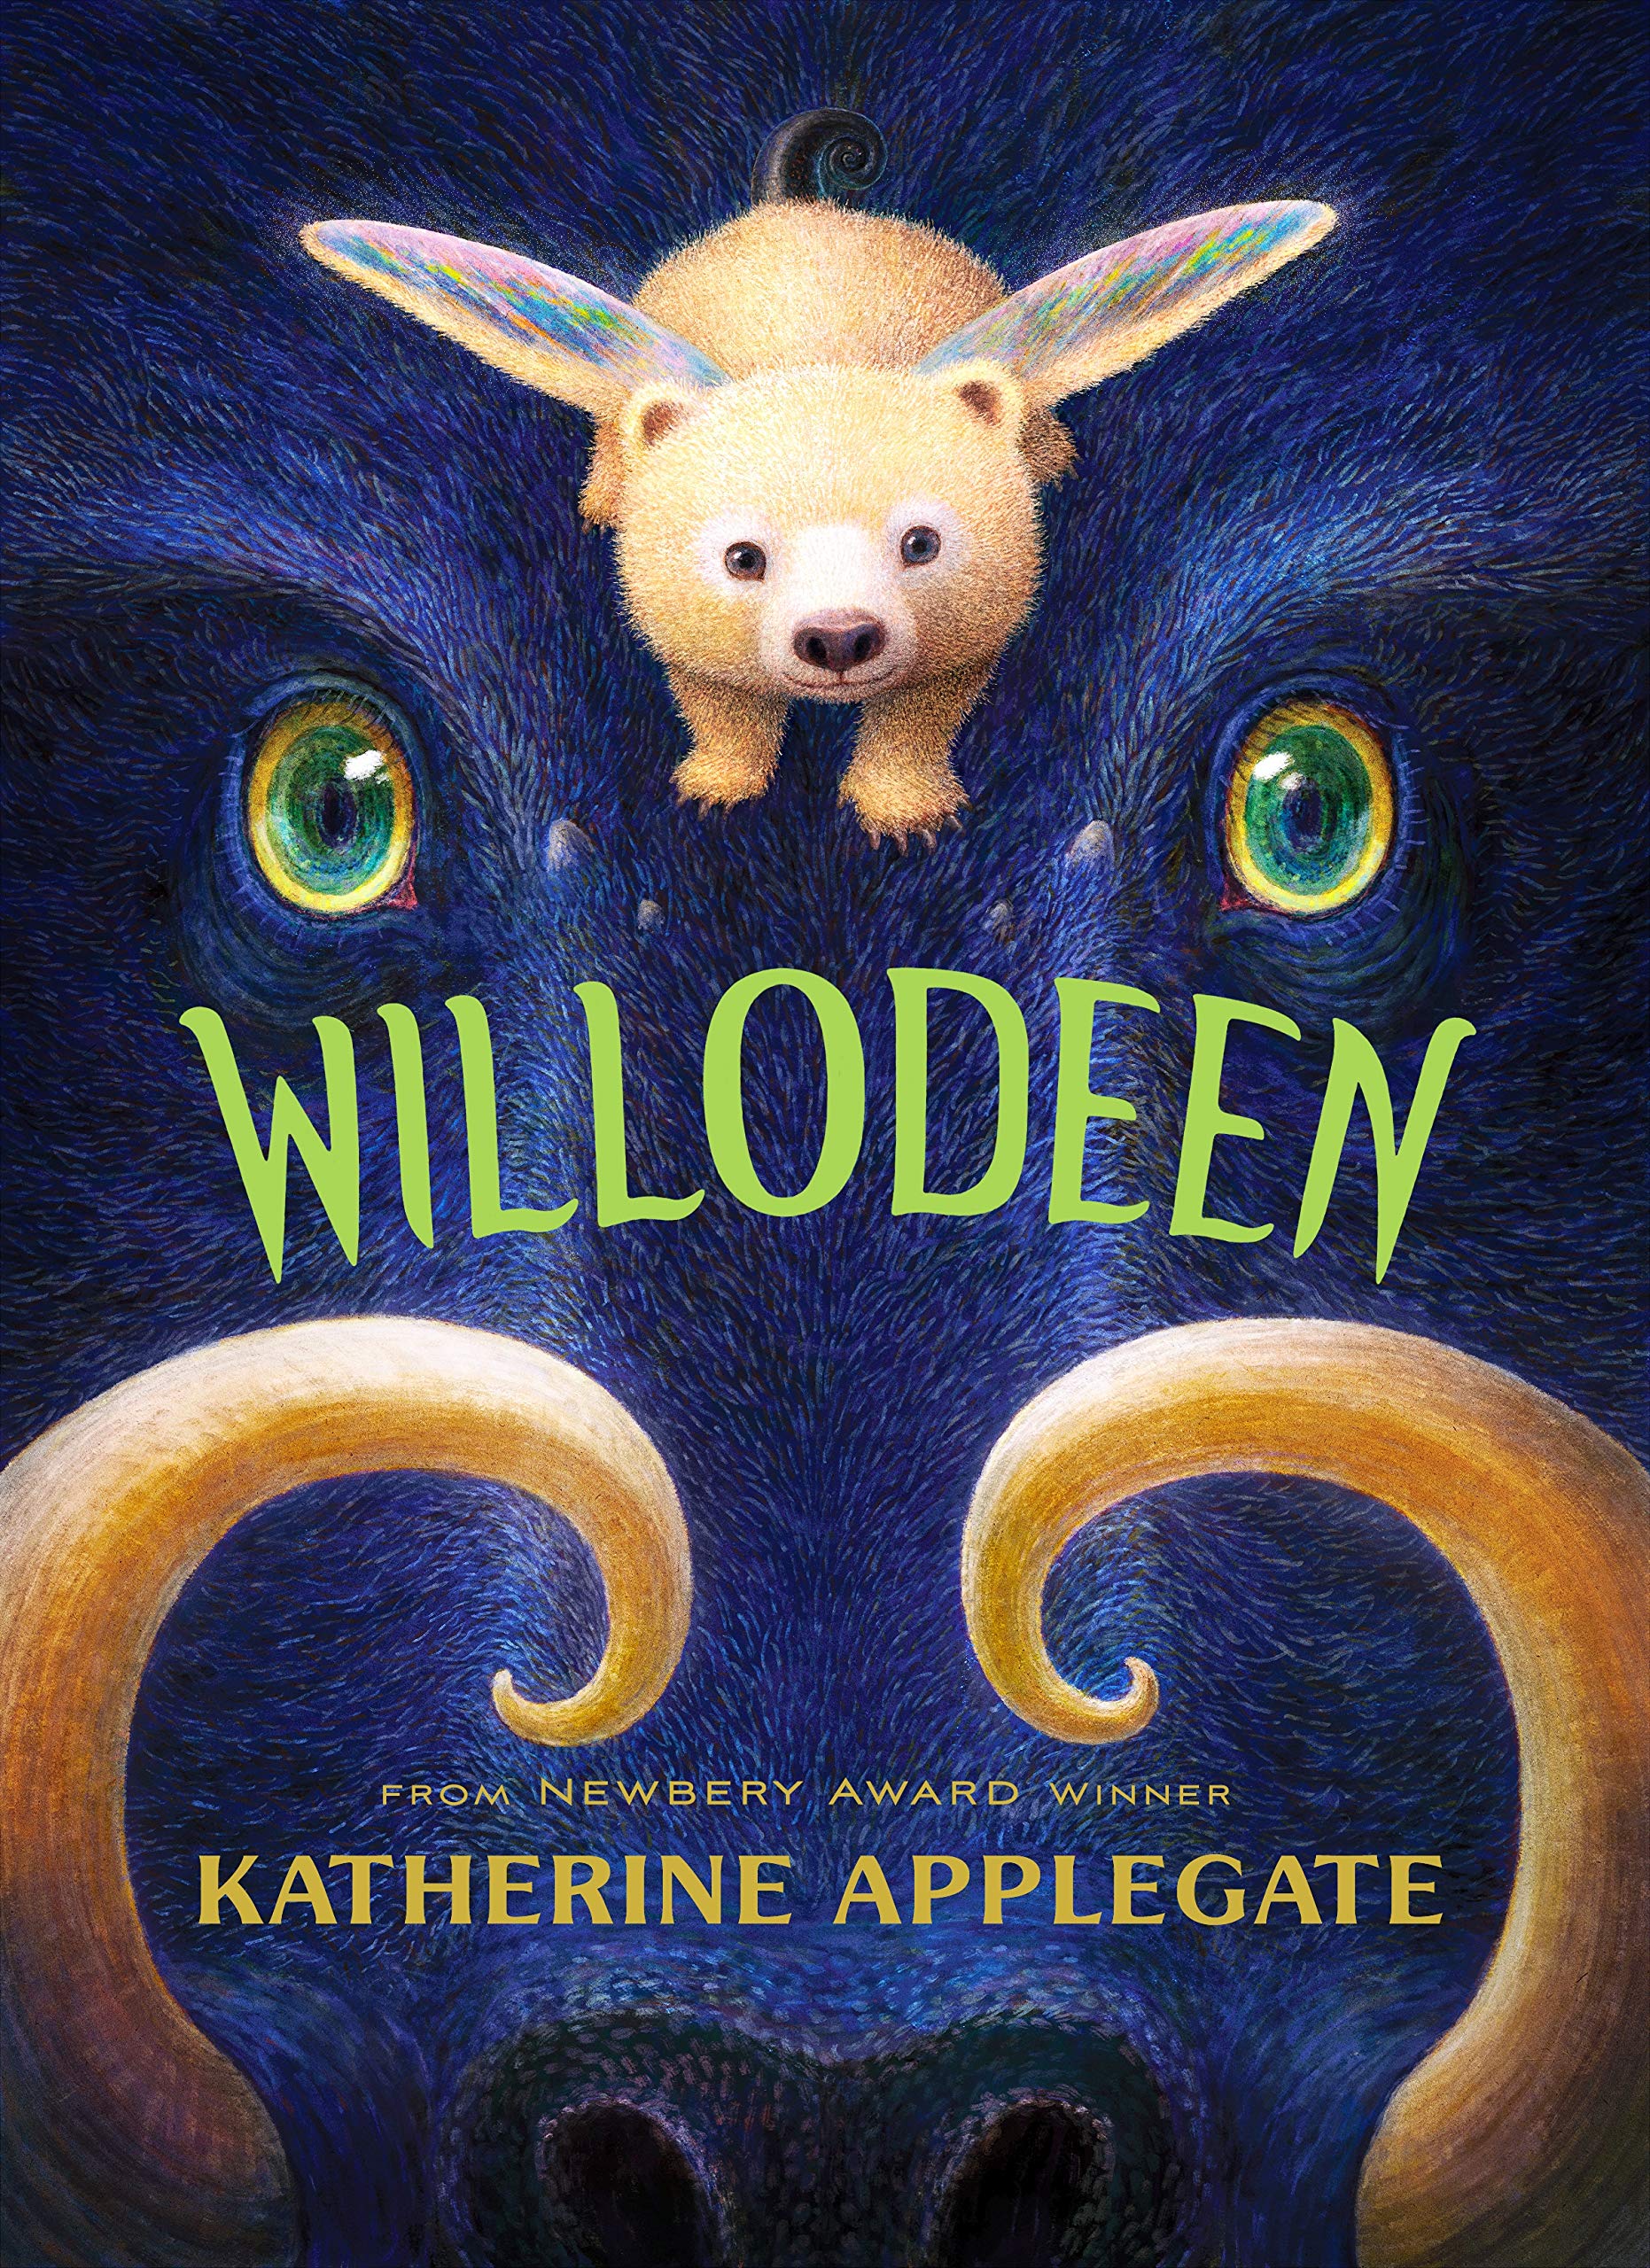 Willodeen by Katherine Applegate